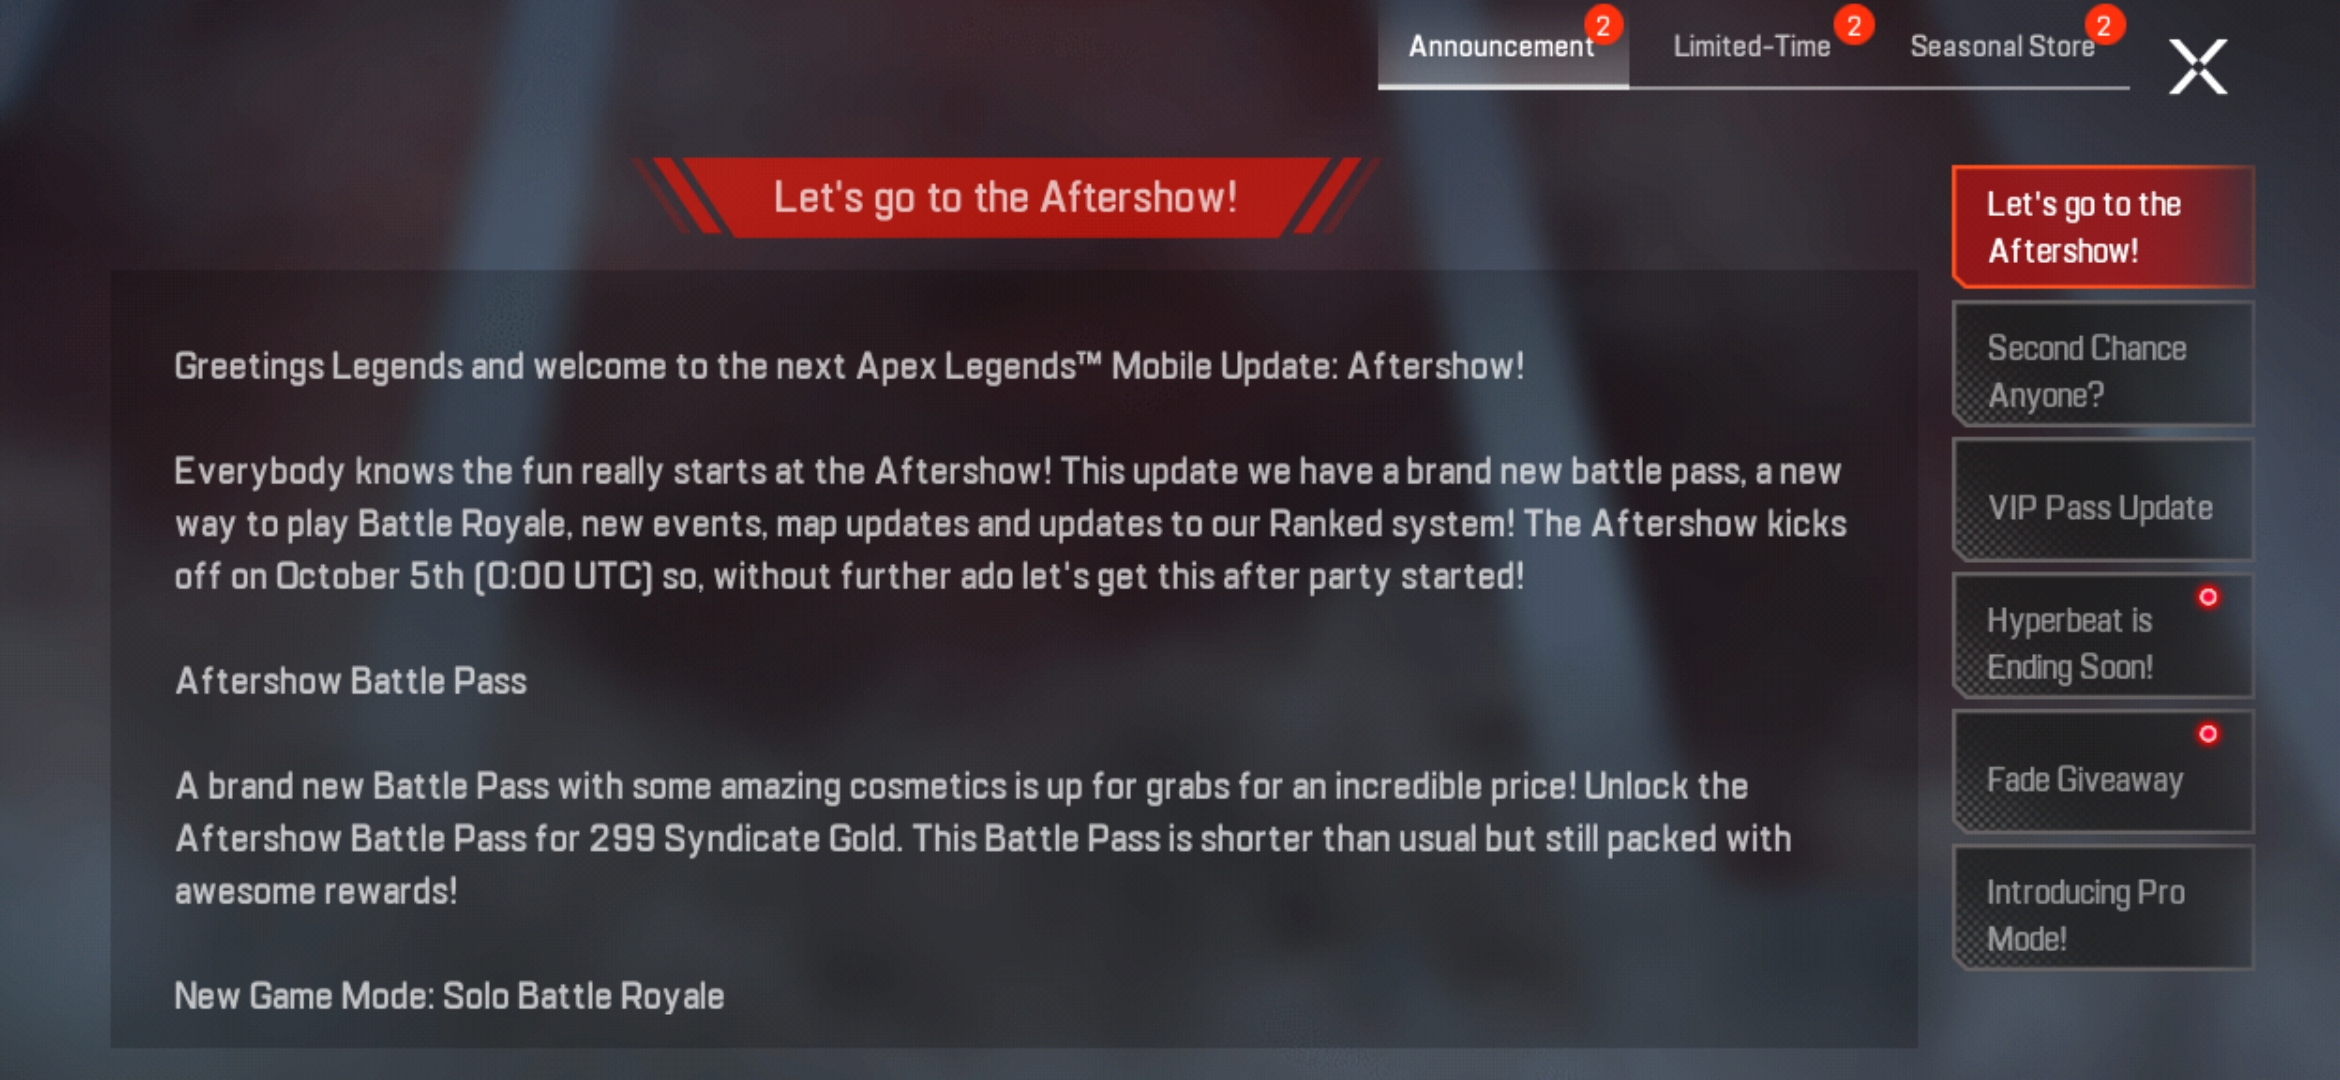 Apex Legends Mobile: Aftershow Patch Notes